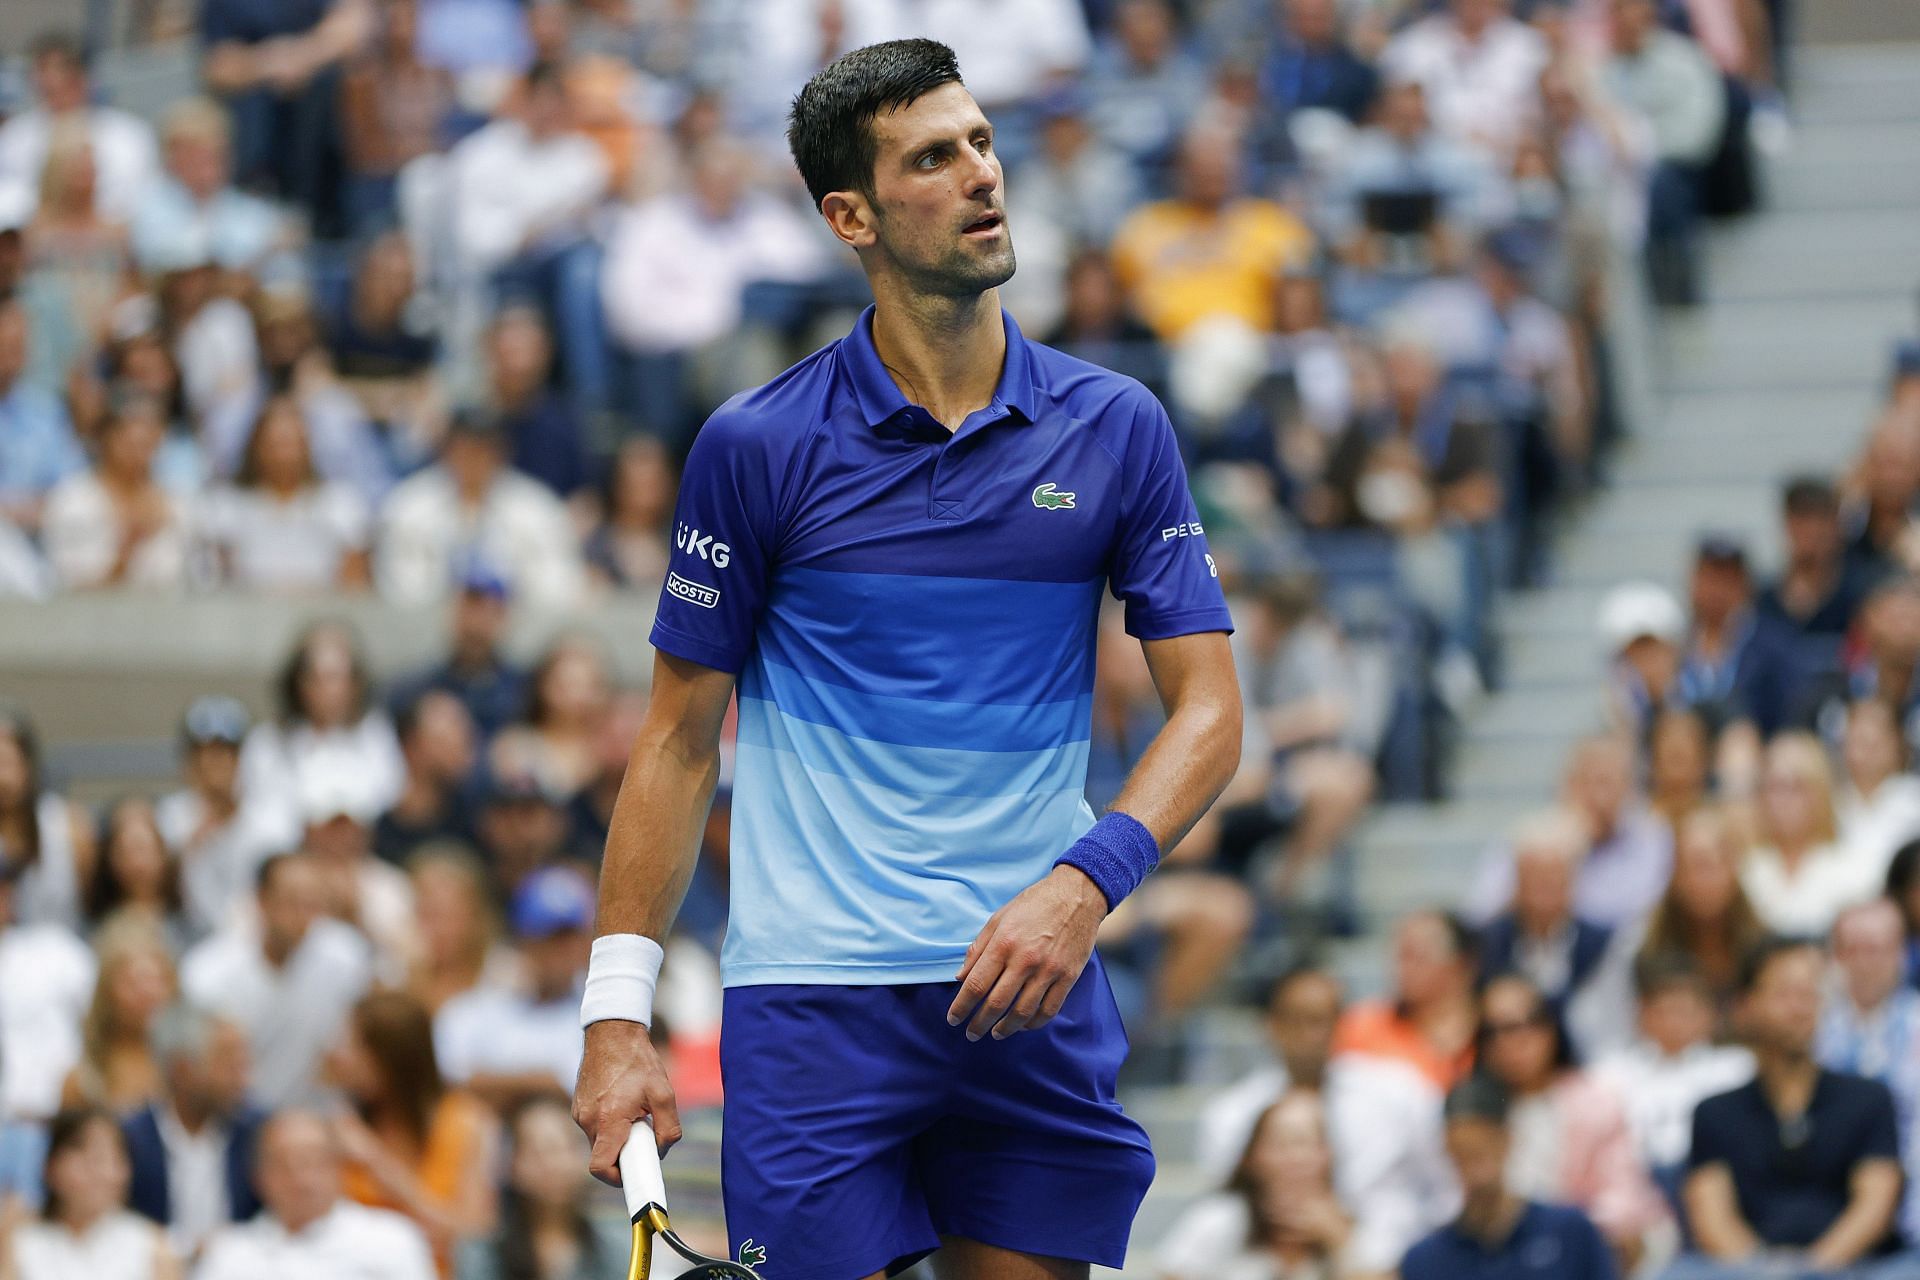 Novak Djokovic during the 2021 US Open